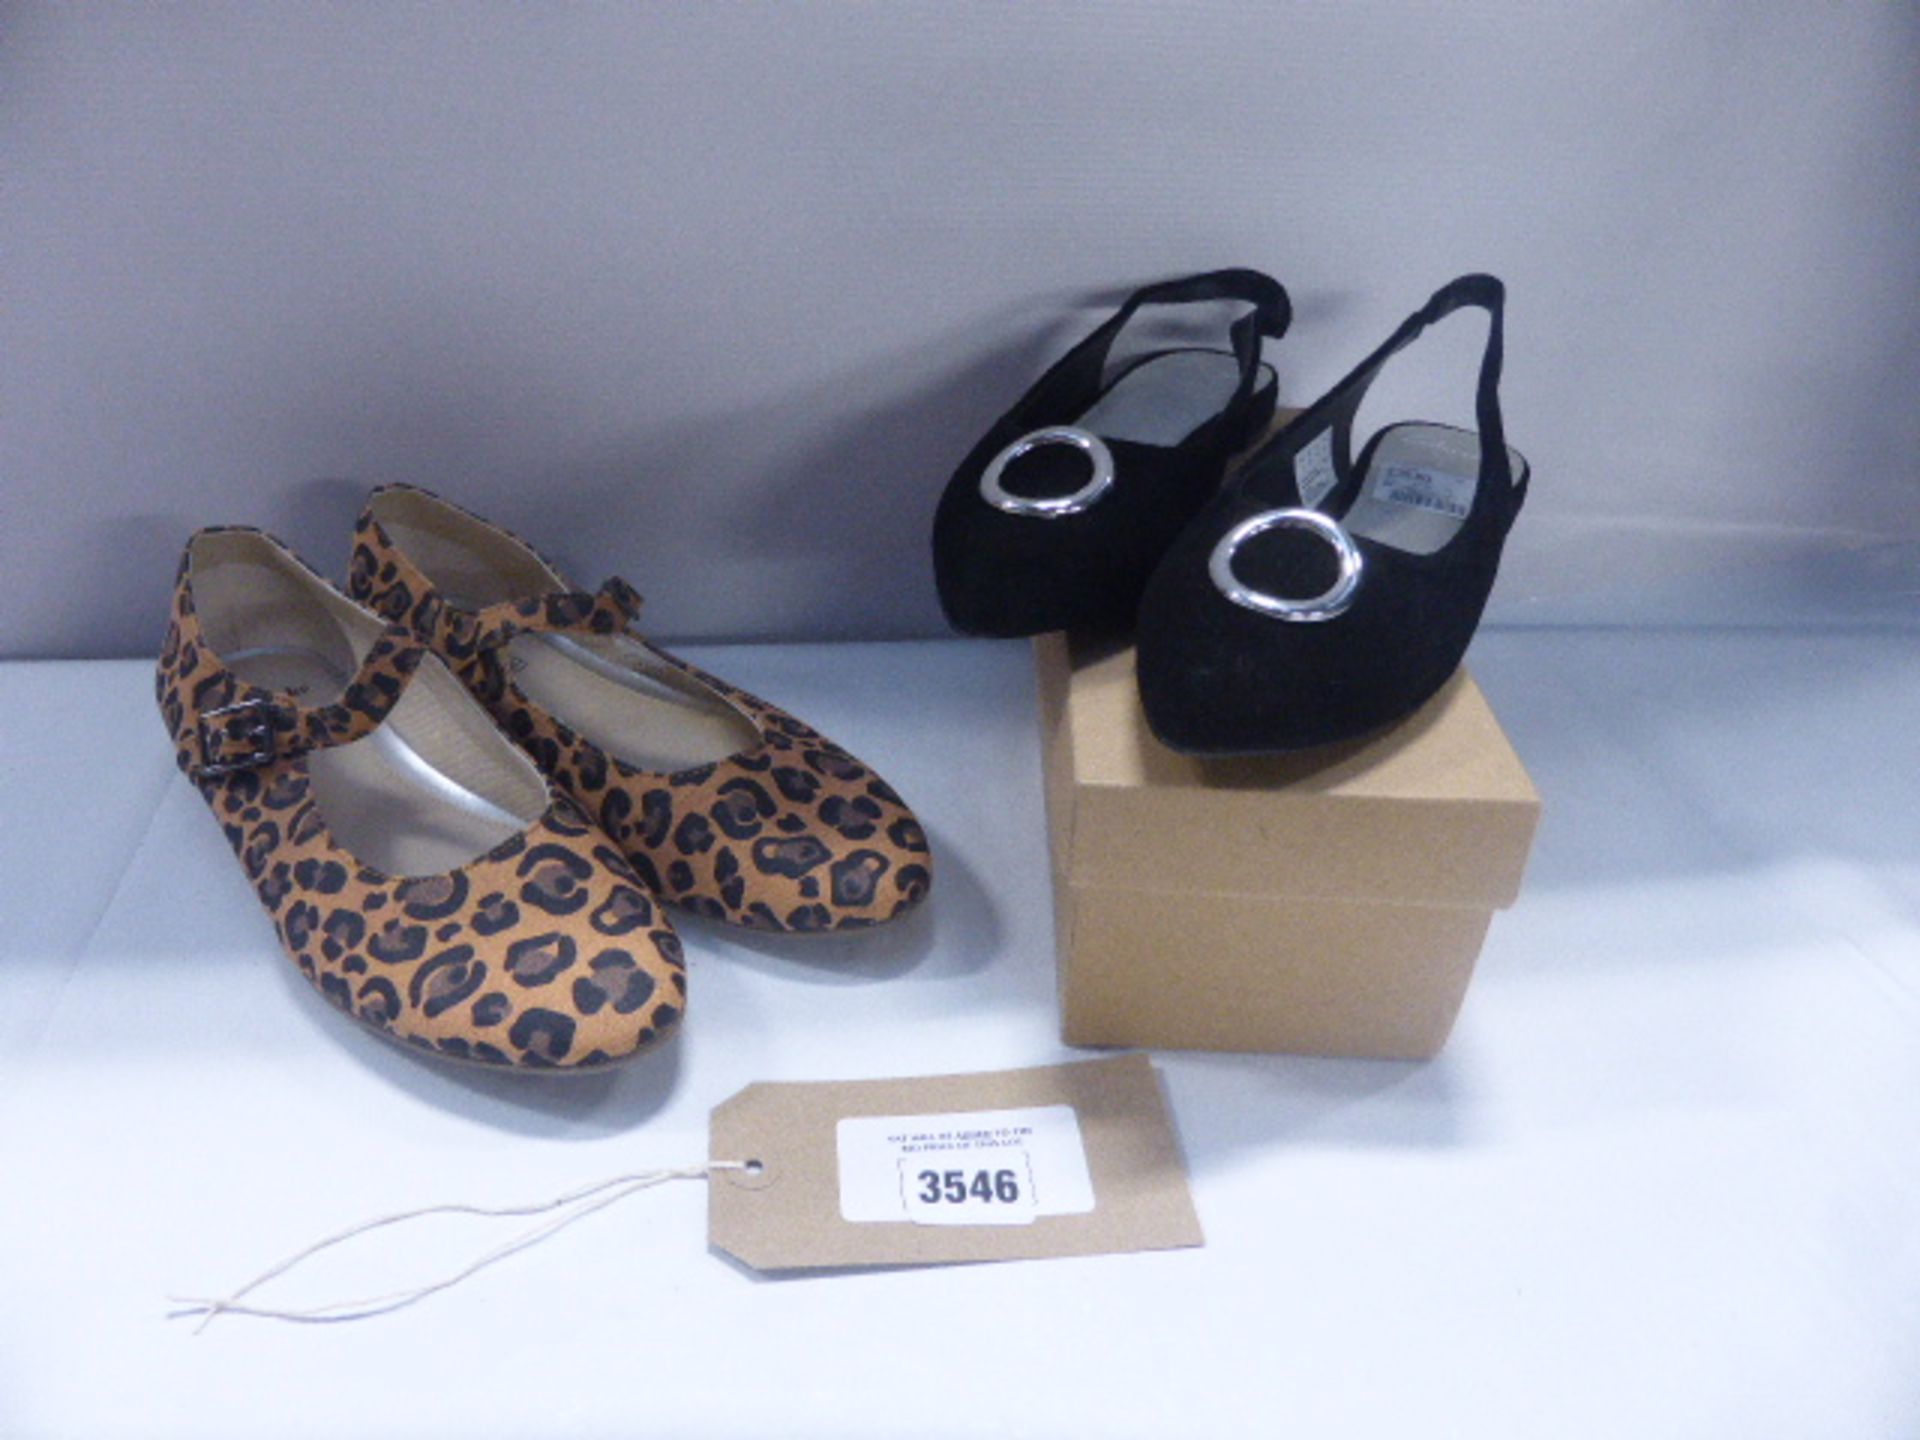 Clarks Leopard Print Strap Shoes Size 4.5 and Clarks Black Suede Strap Shoe Size 4